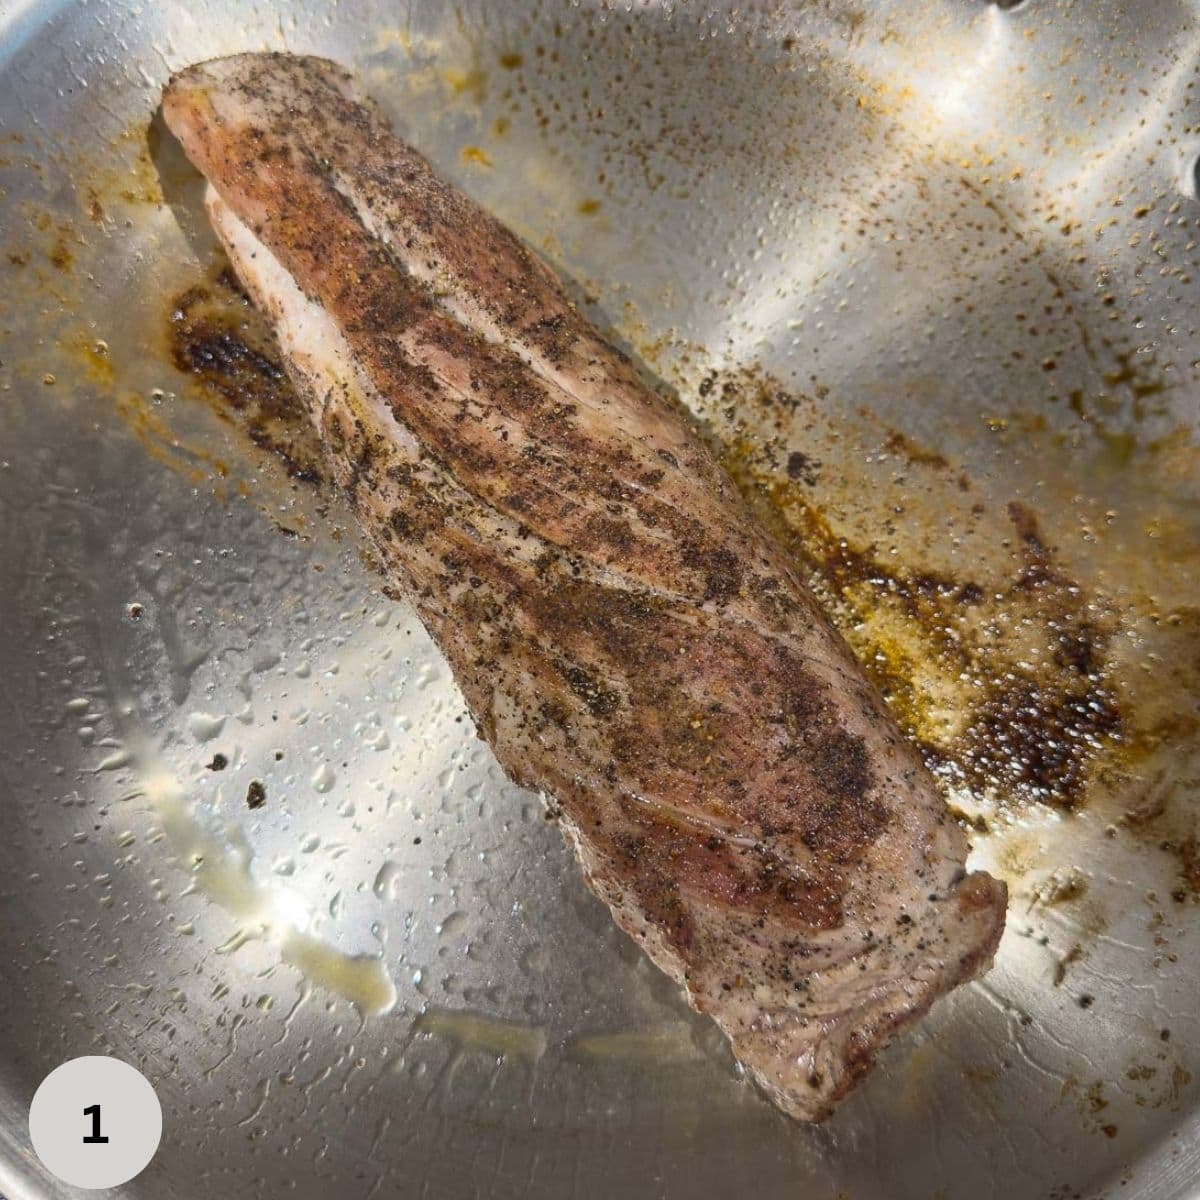 Searing pork tenderloin in a stainless steel fry pan. 